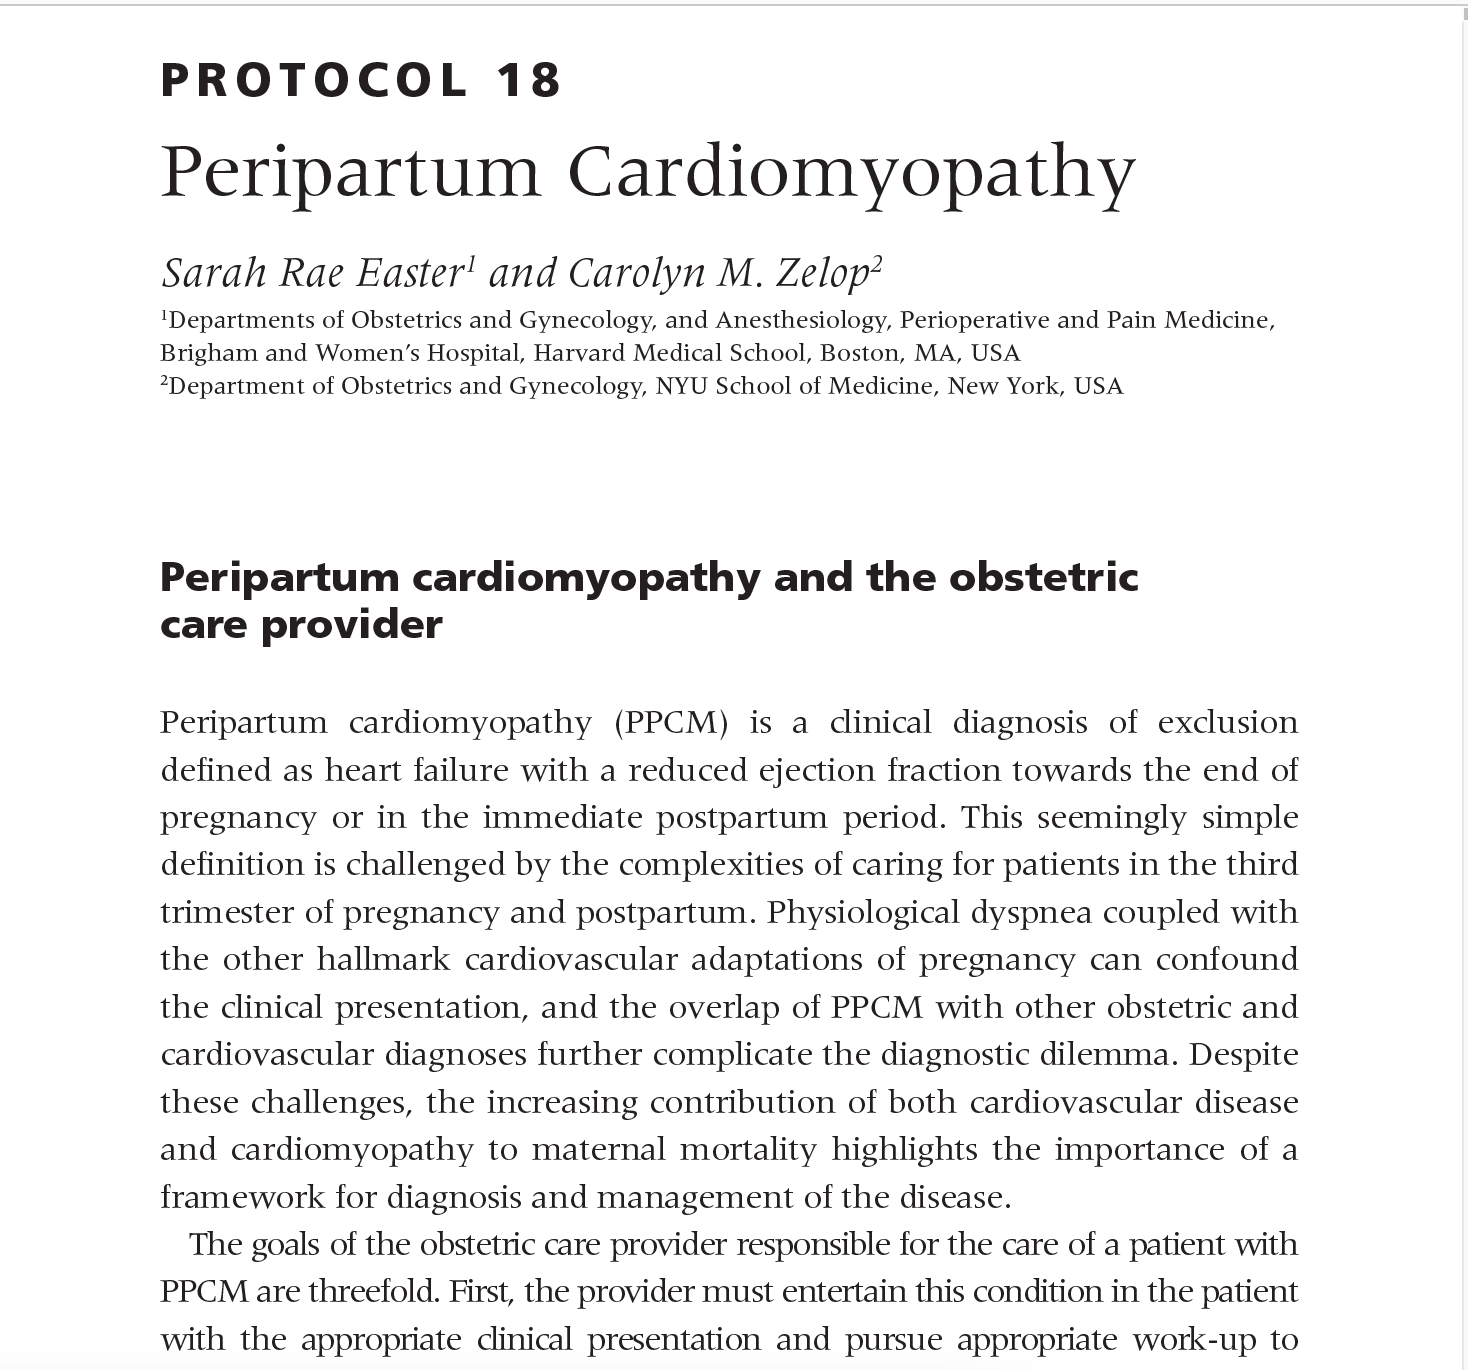 Protocols for High-Risk Pregnancies, 7th Edition: Protocol 18 - Peripartum Cardiomyopathy